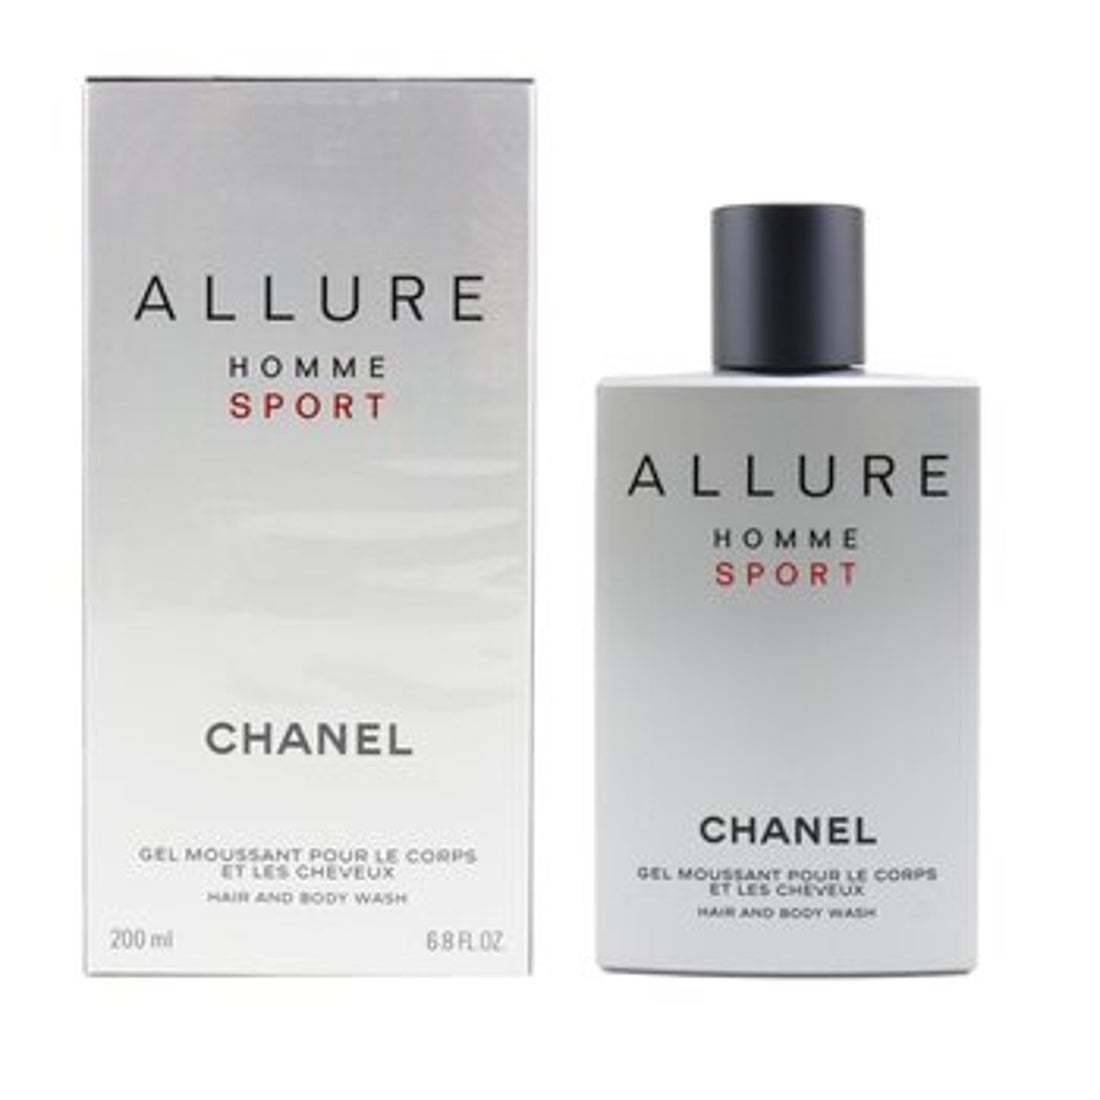 Pour homme sport. Chanel Allure homme Sport. Chanel Allure homme Edition Blanche. Homme Sport шампунь. Allure homme Sport без крышки.